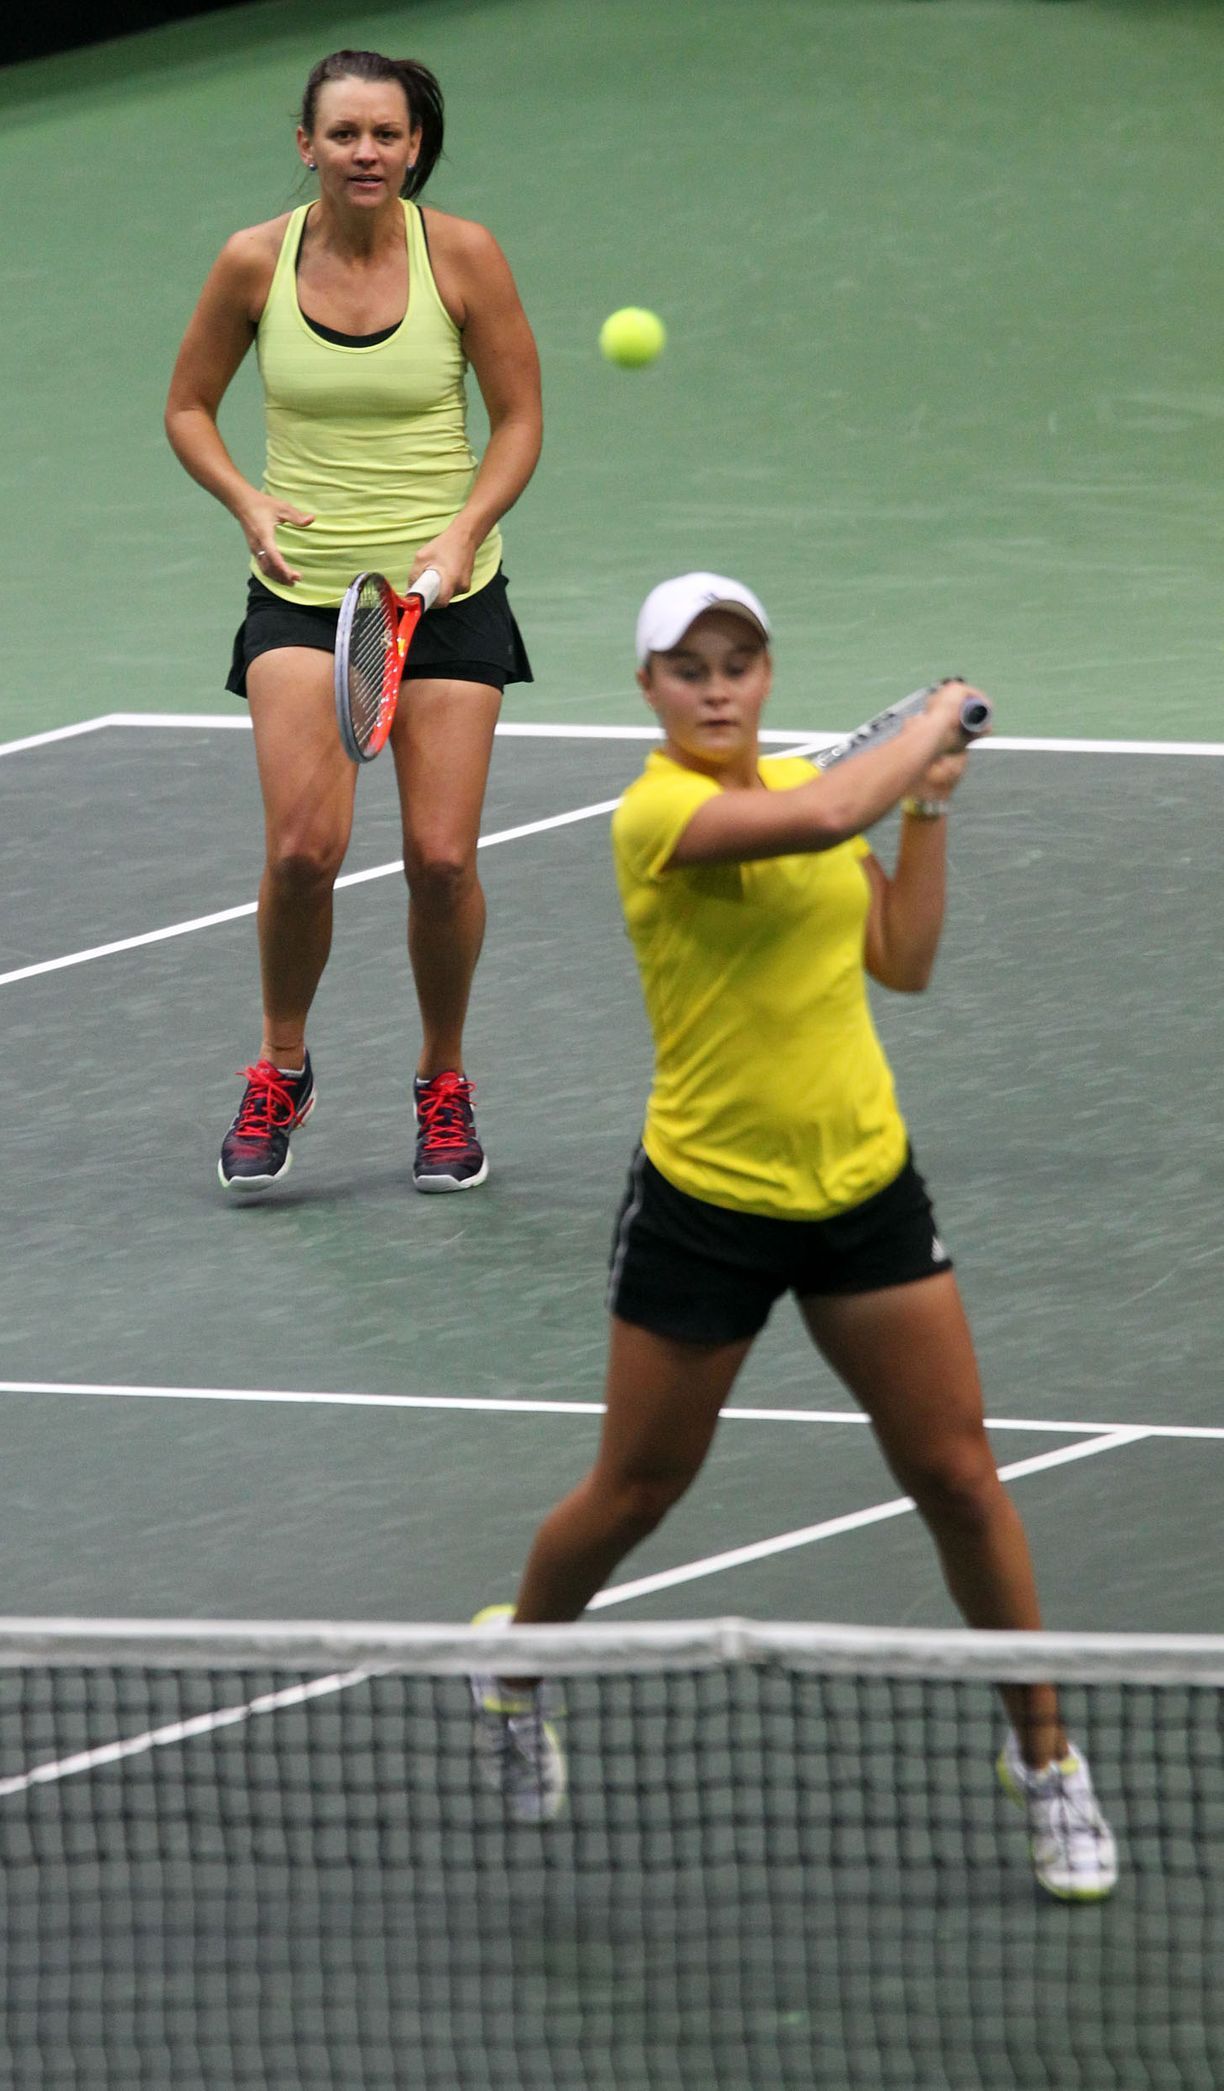 Fed Cup, Česko - Austrálie : Ashleigh Bartyová a Casey Dellacquaová